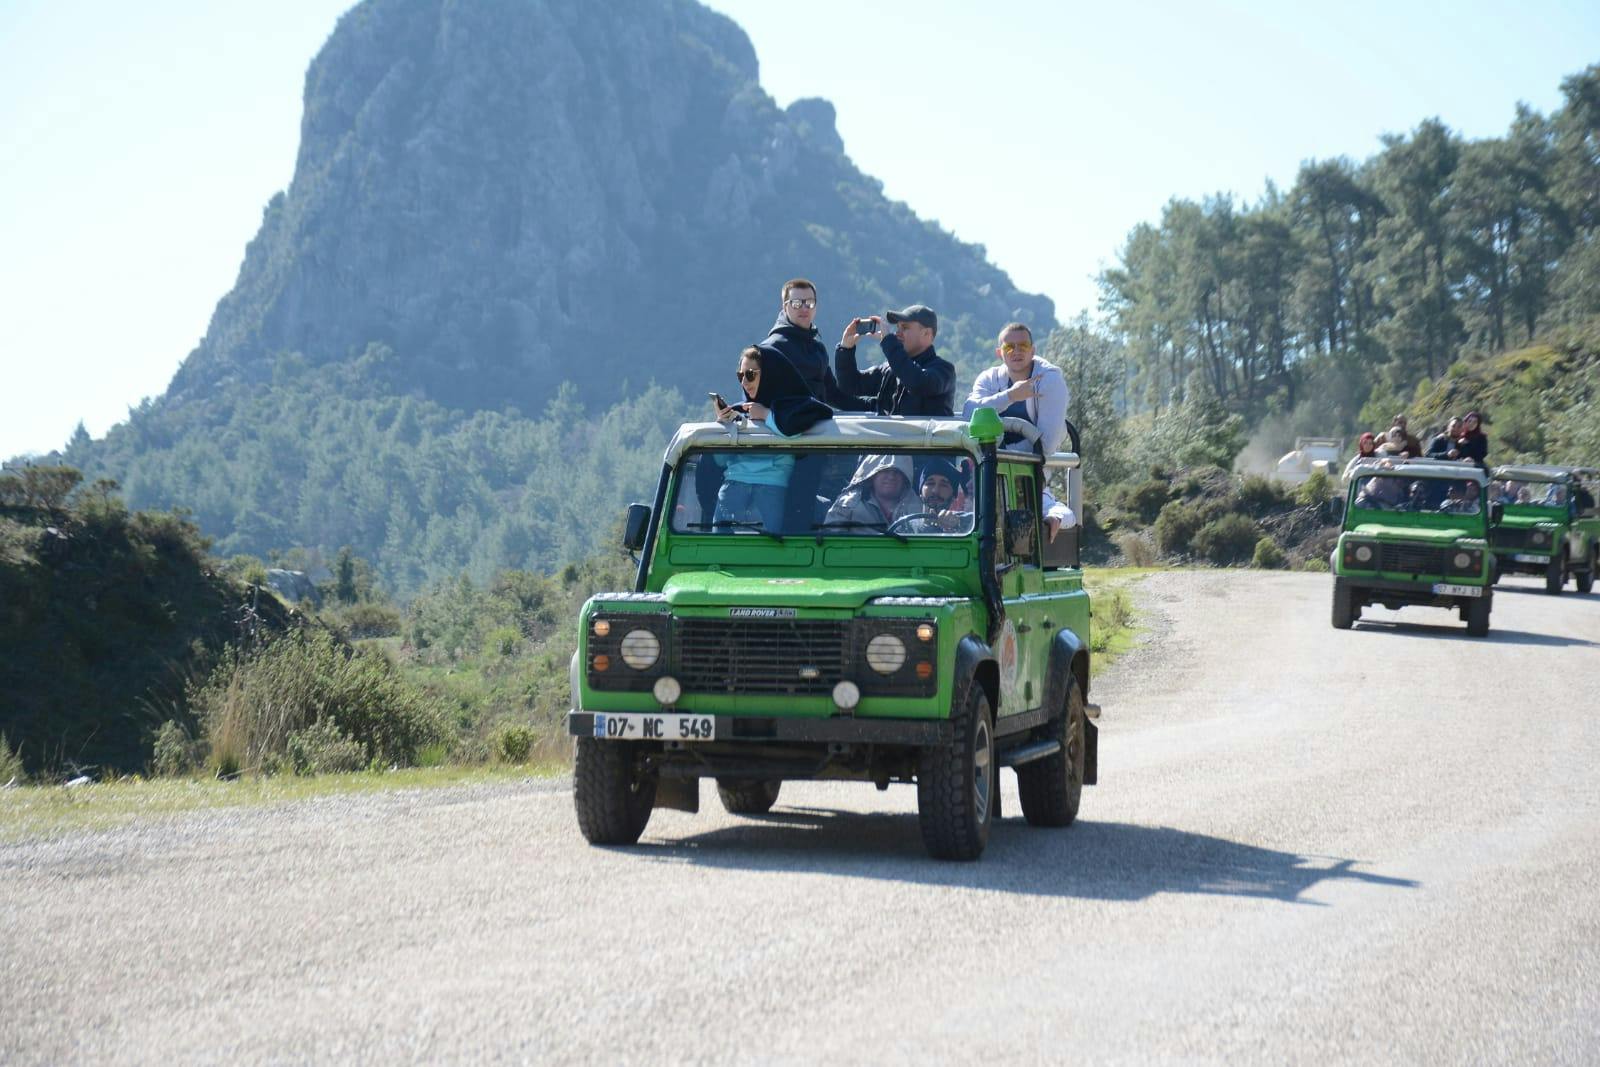 Product image for Jeep Safari Adventure in Alanya